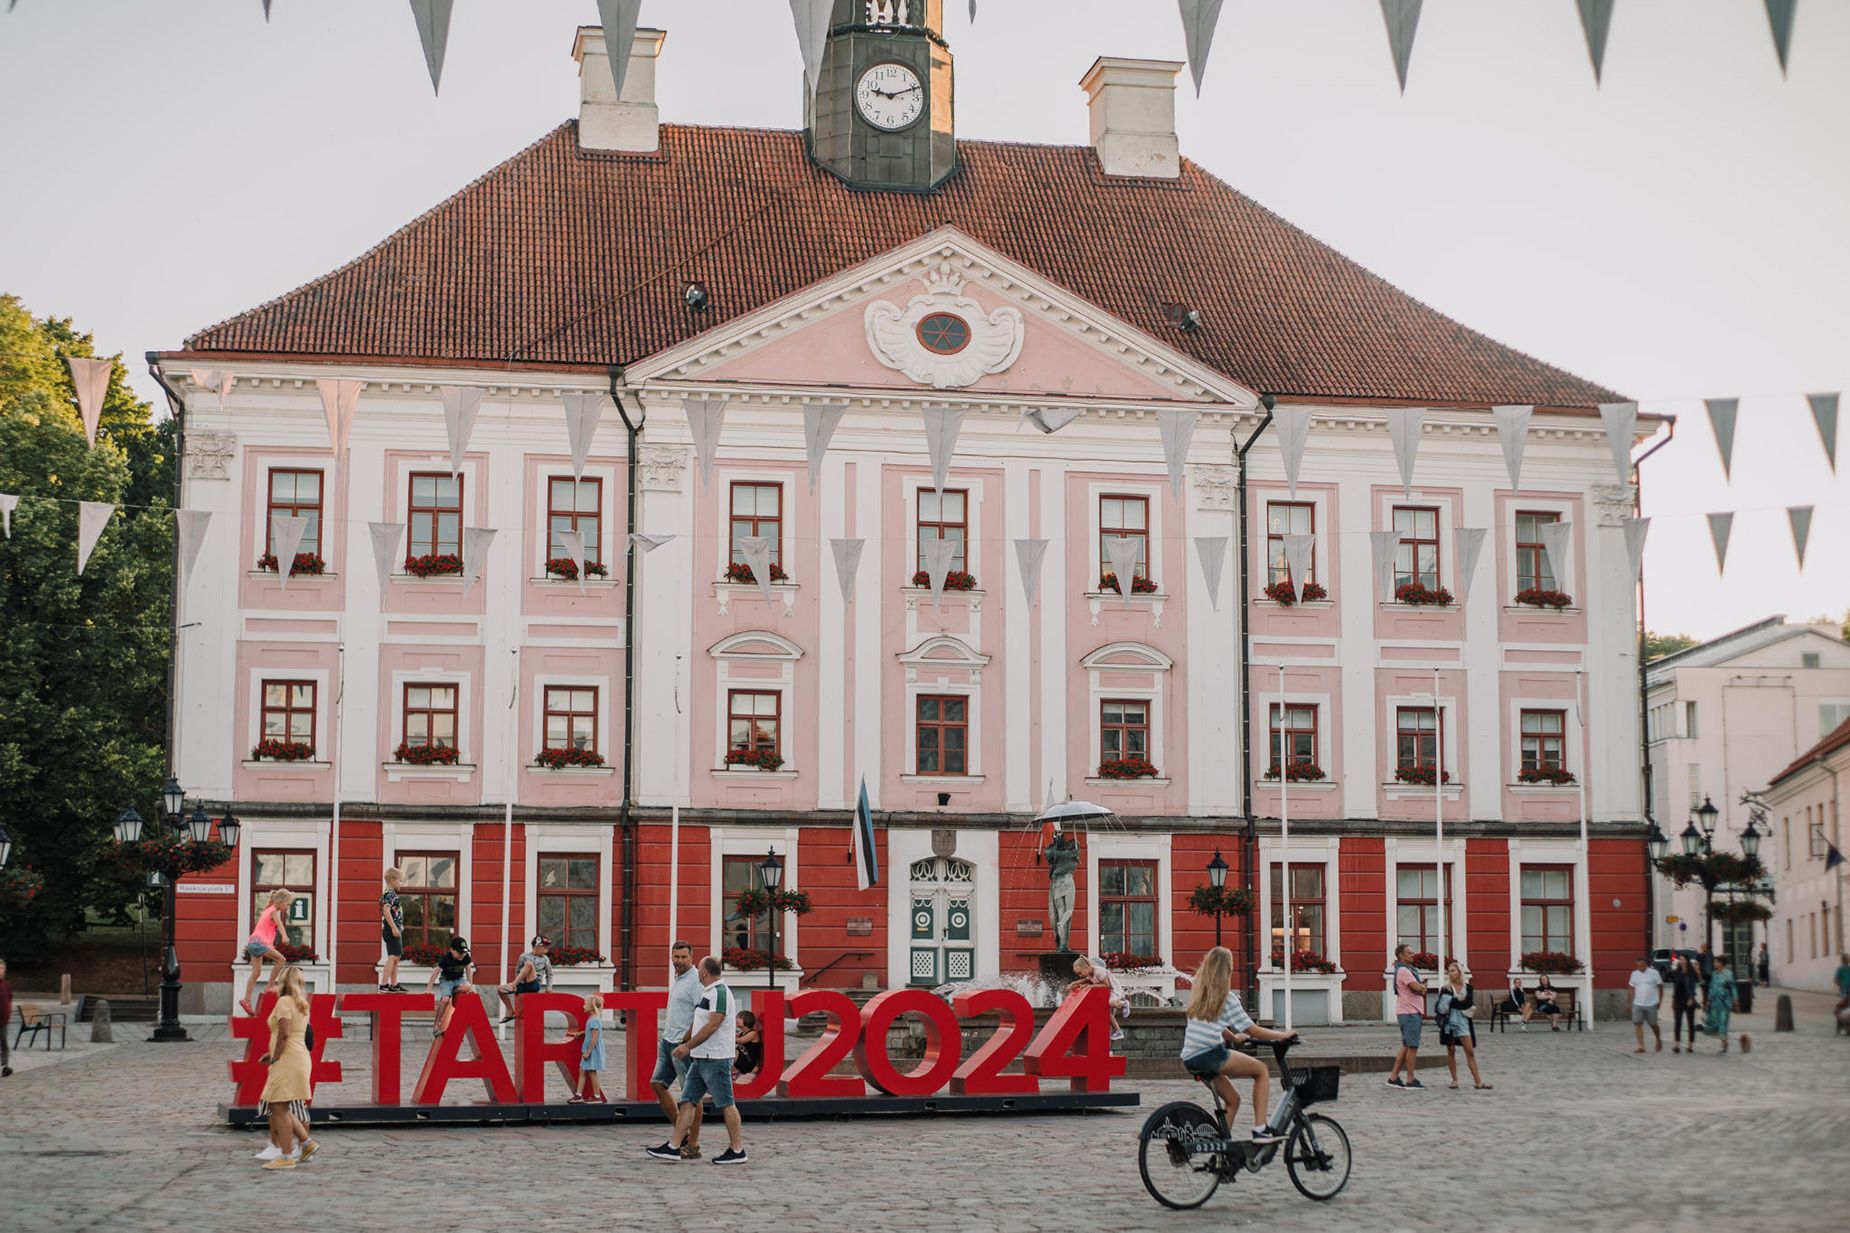 Tartu is a 2024 European Capital of Culture.